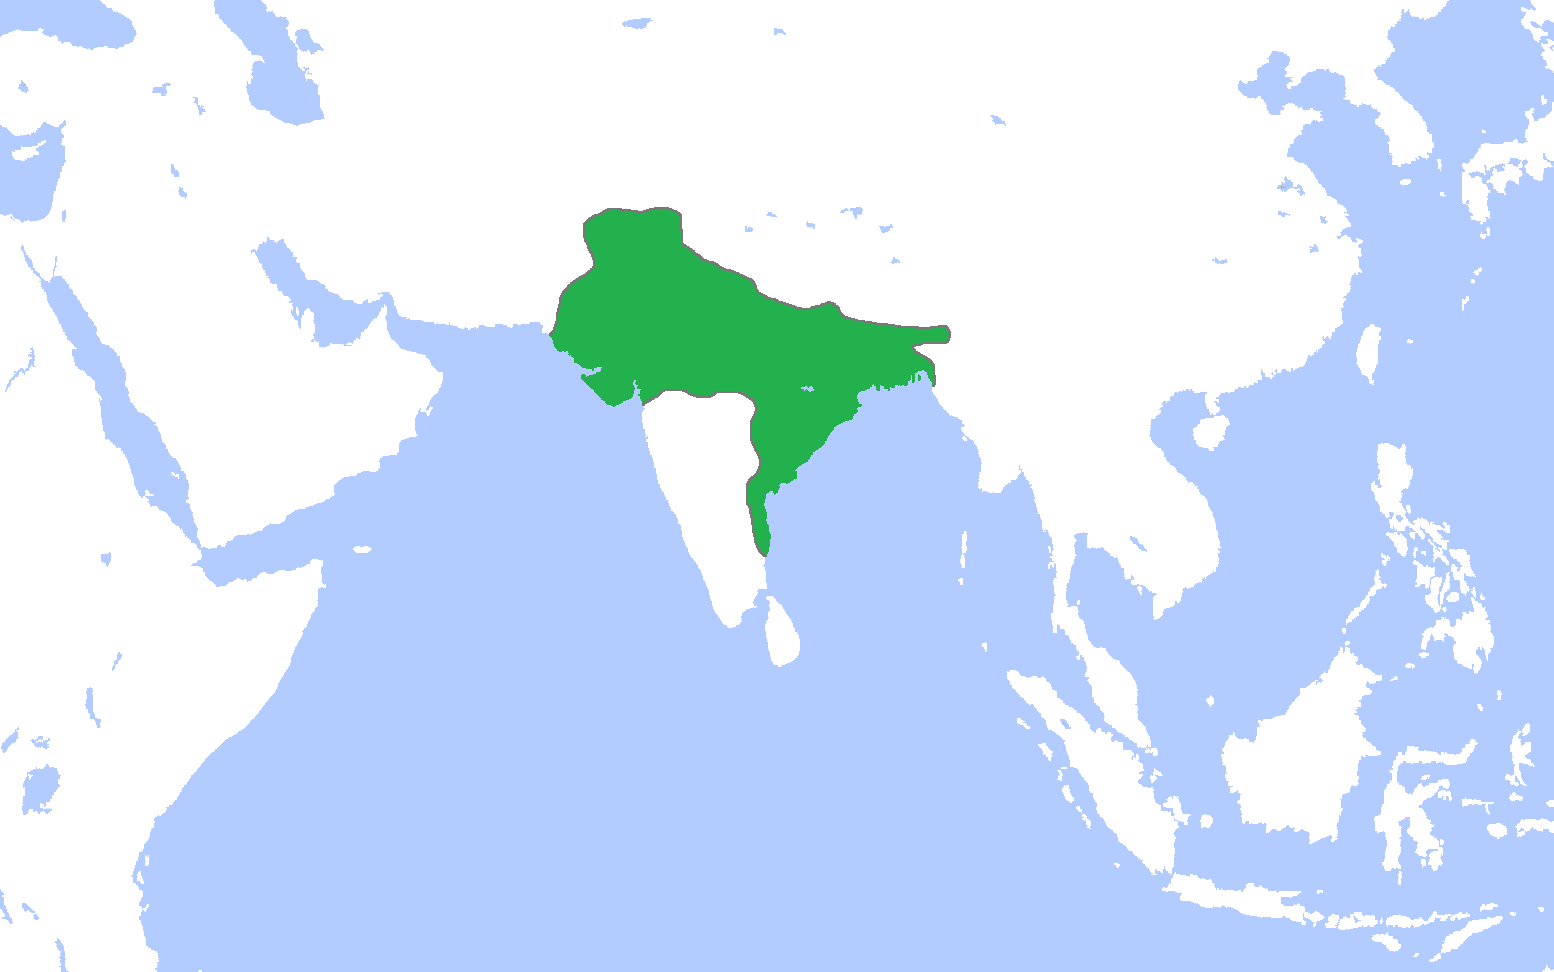 Location of Gupta Empire